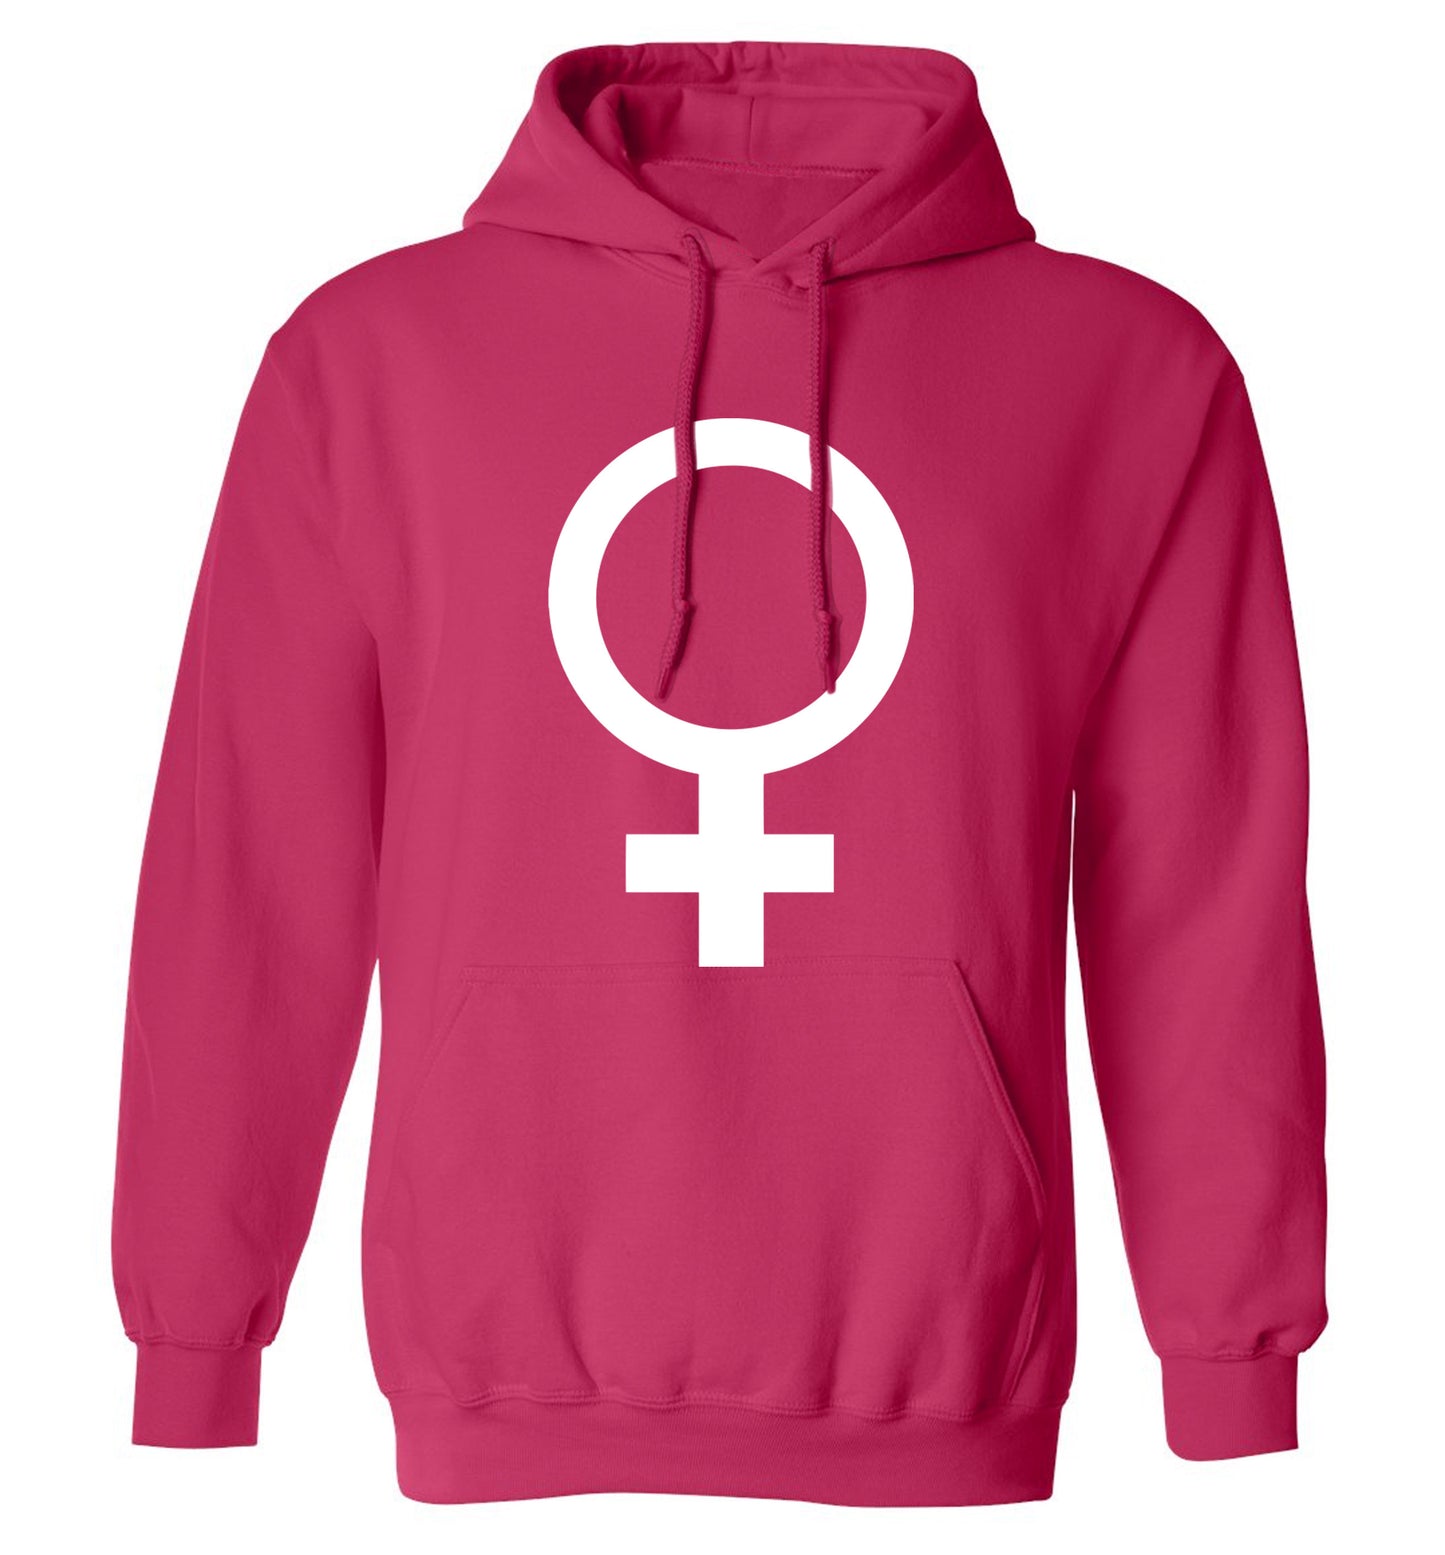 Female symbol large adults unisex pink hoodie 2XL